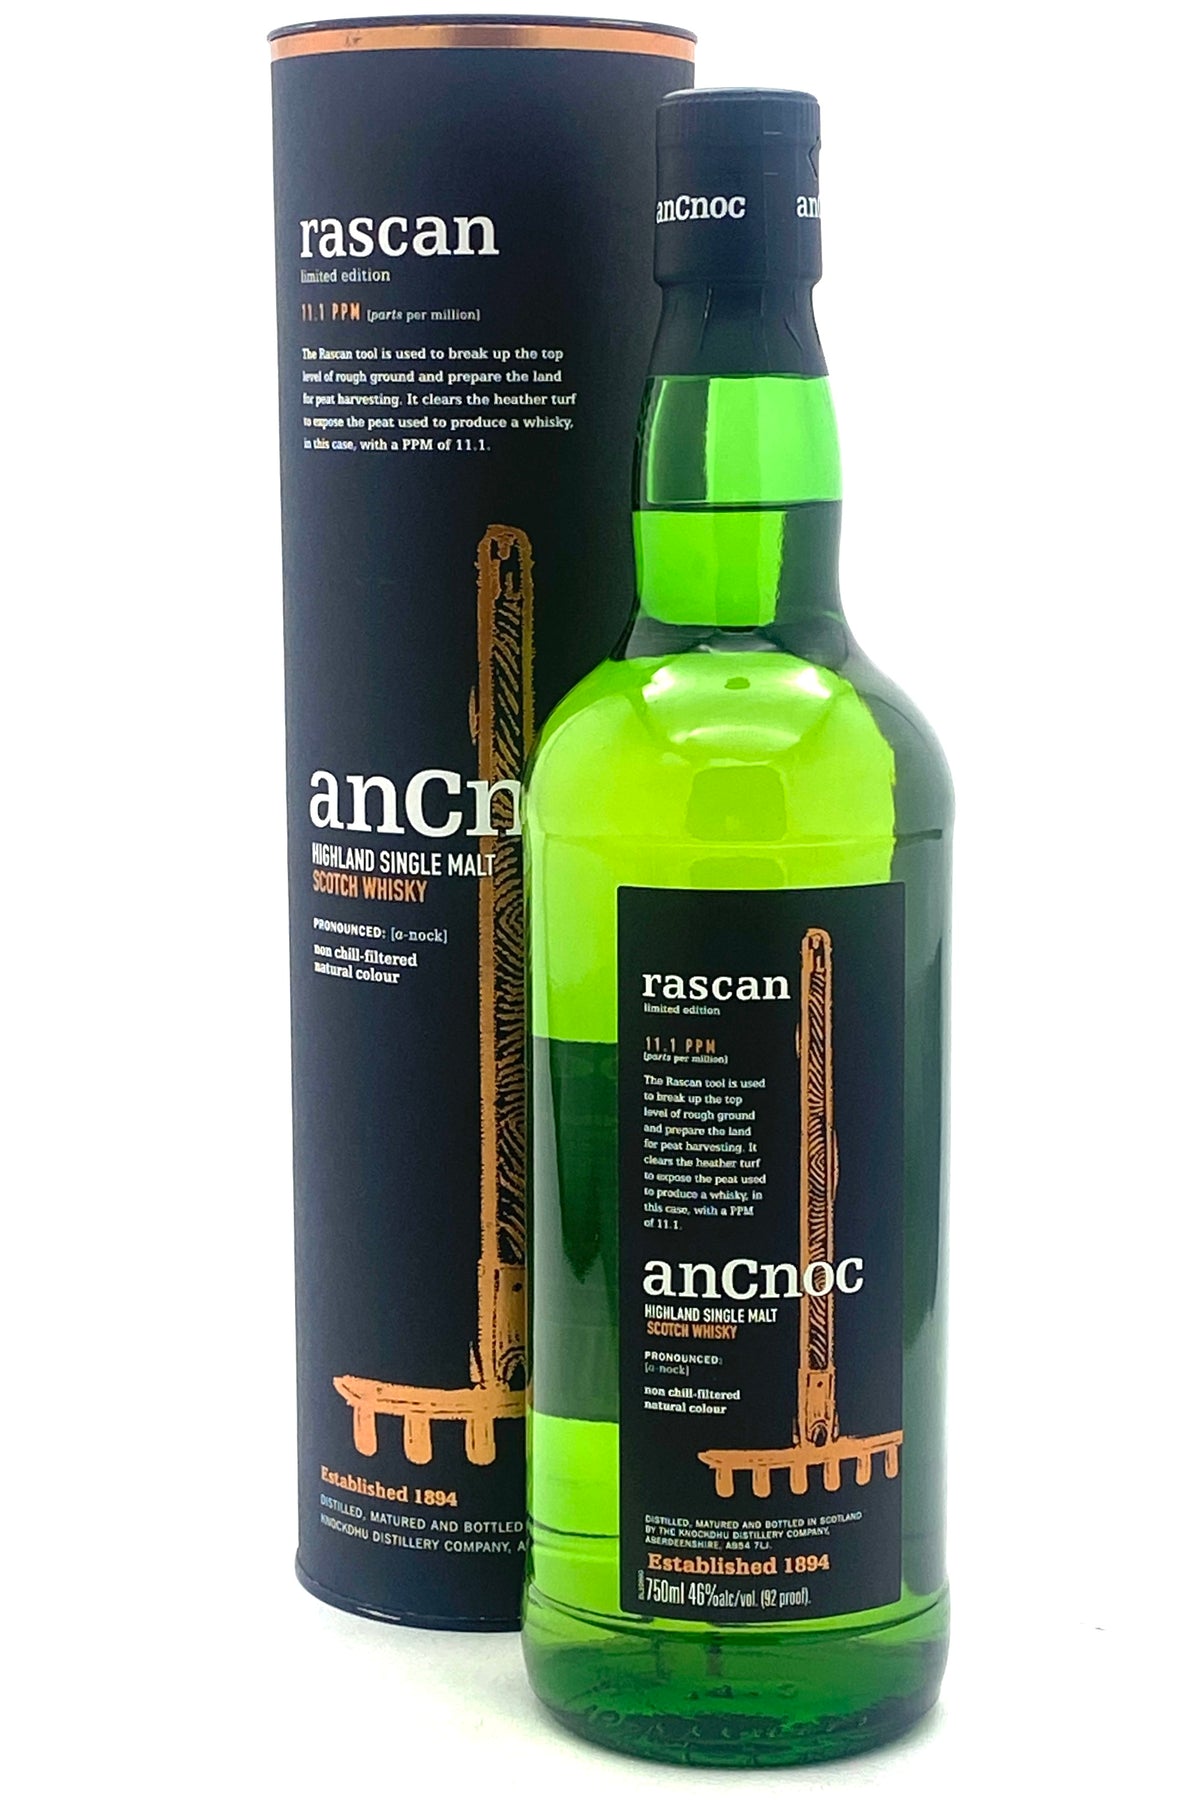 AnCnoc Rascan Scotch Whisky